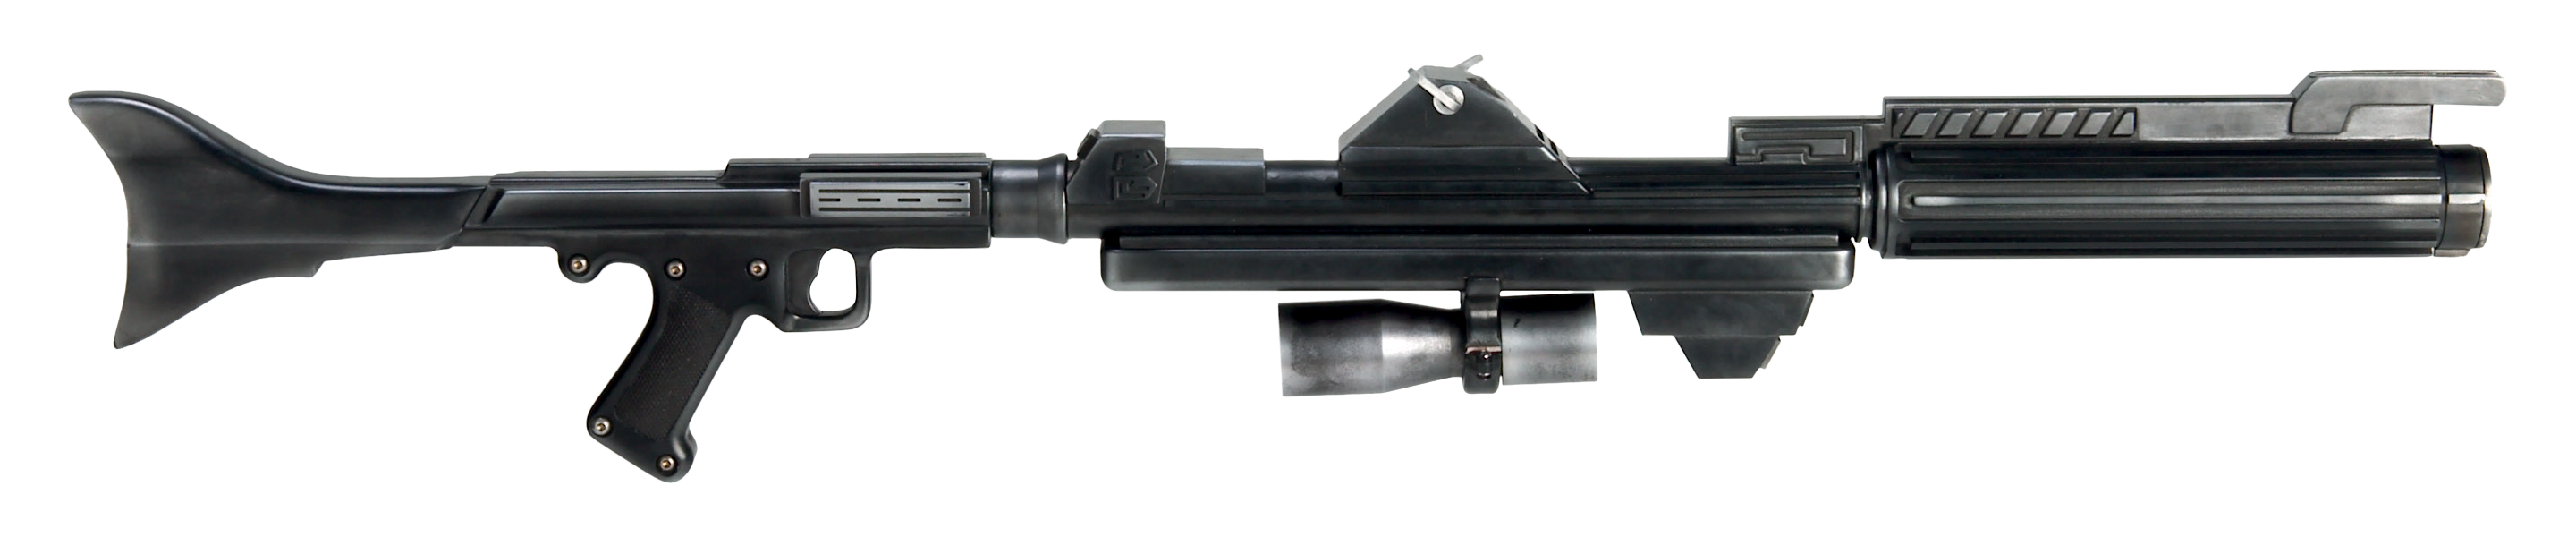 dc 15a blaster rifle